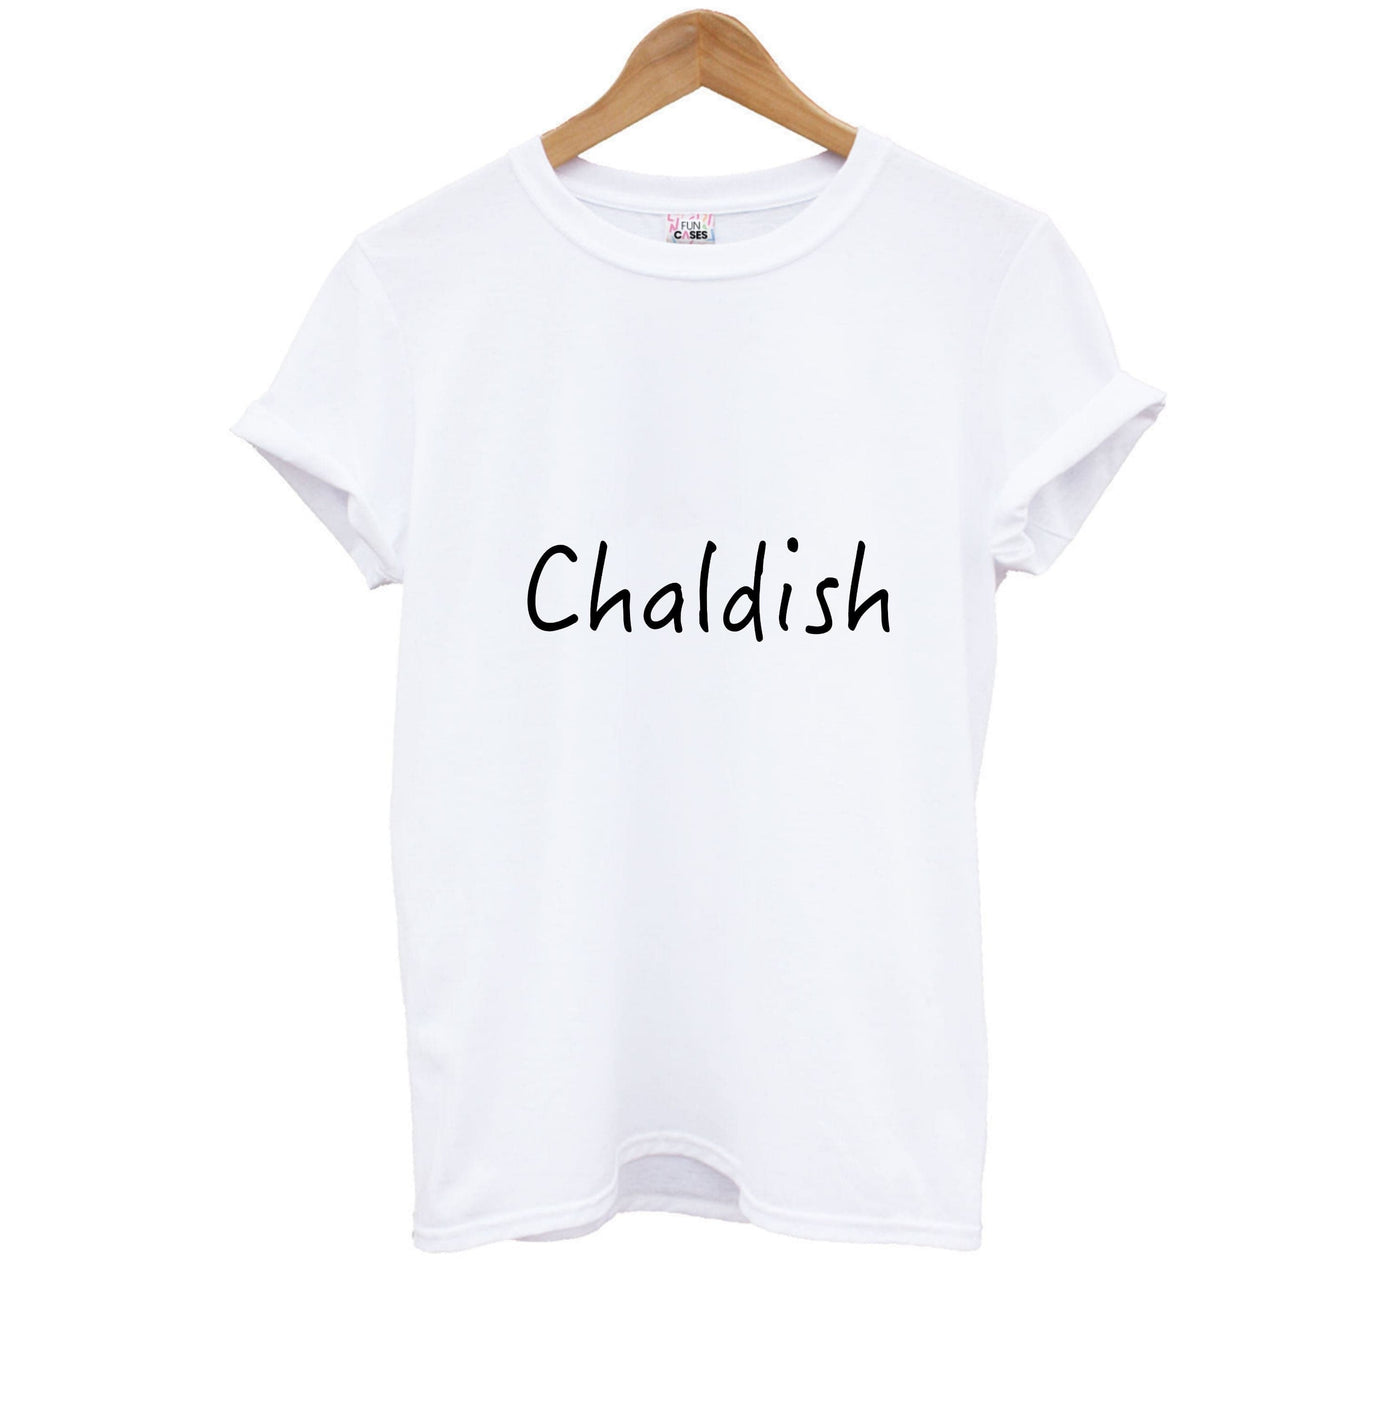 Chaldish - Islanders Kids T-Shirt